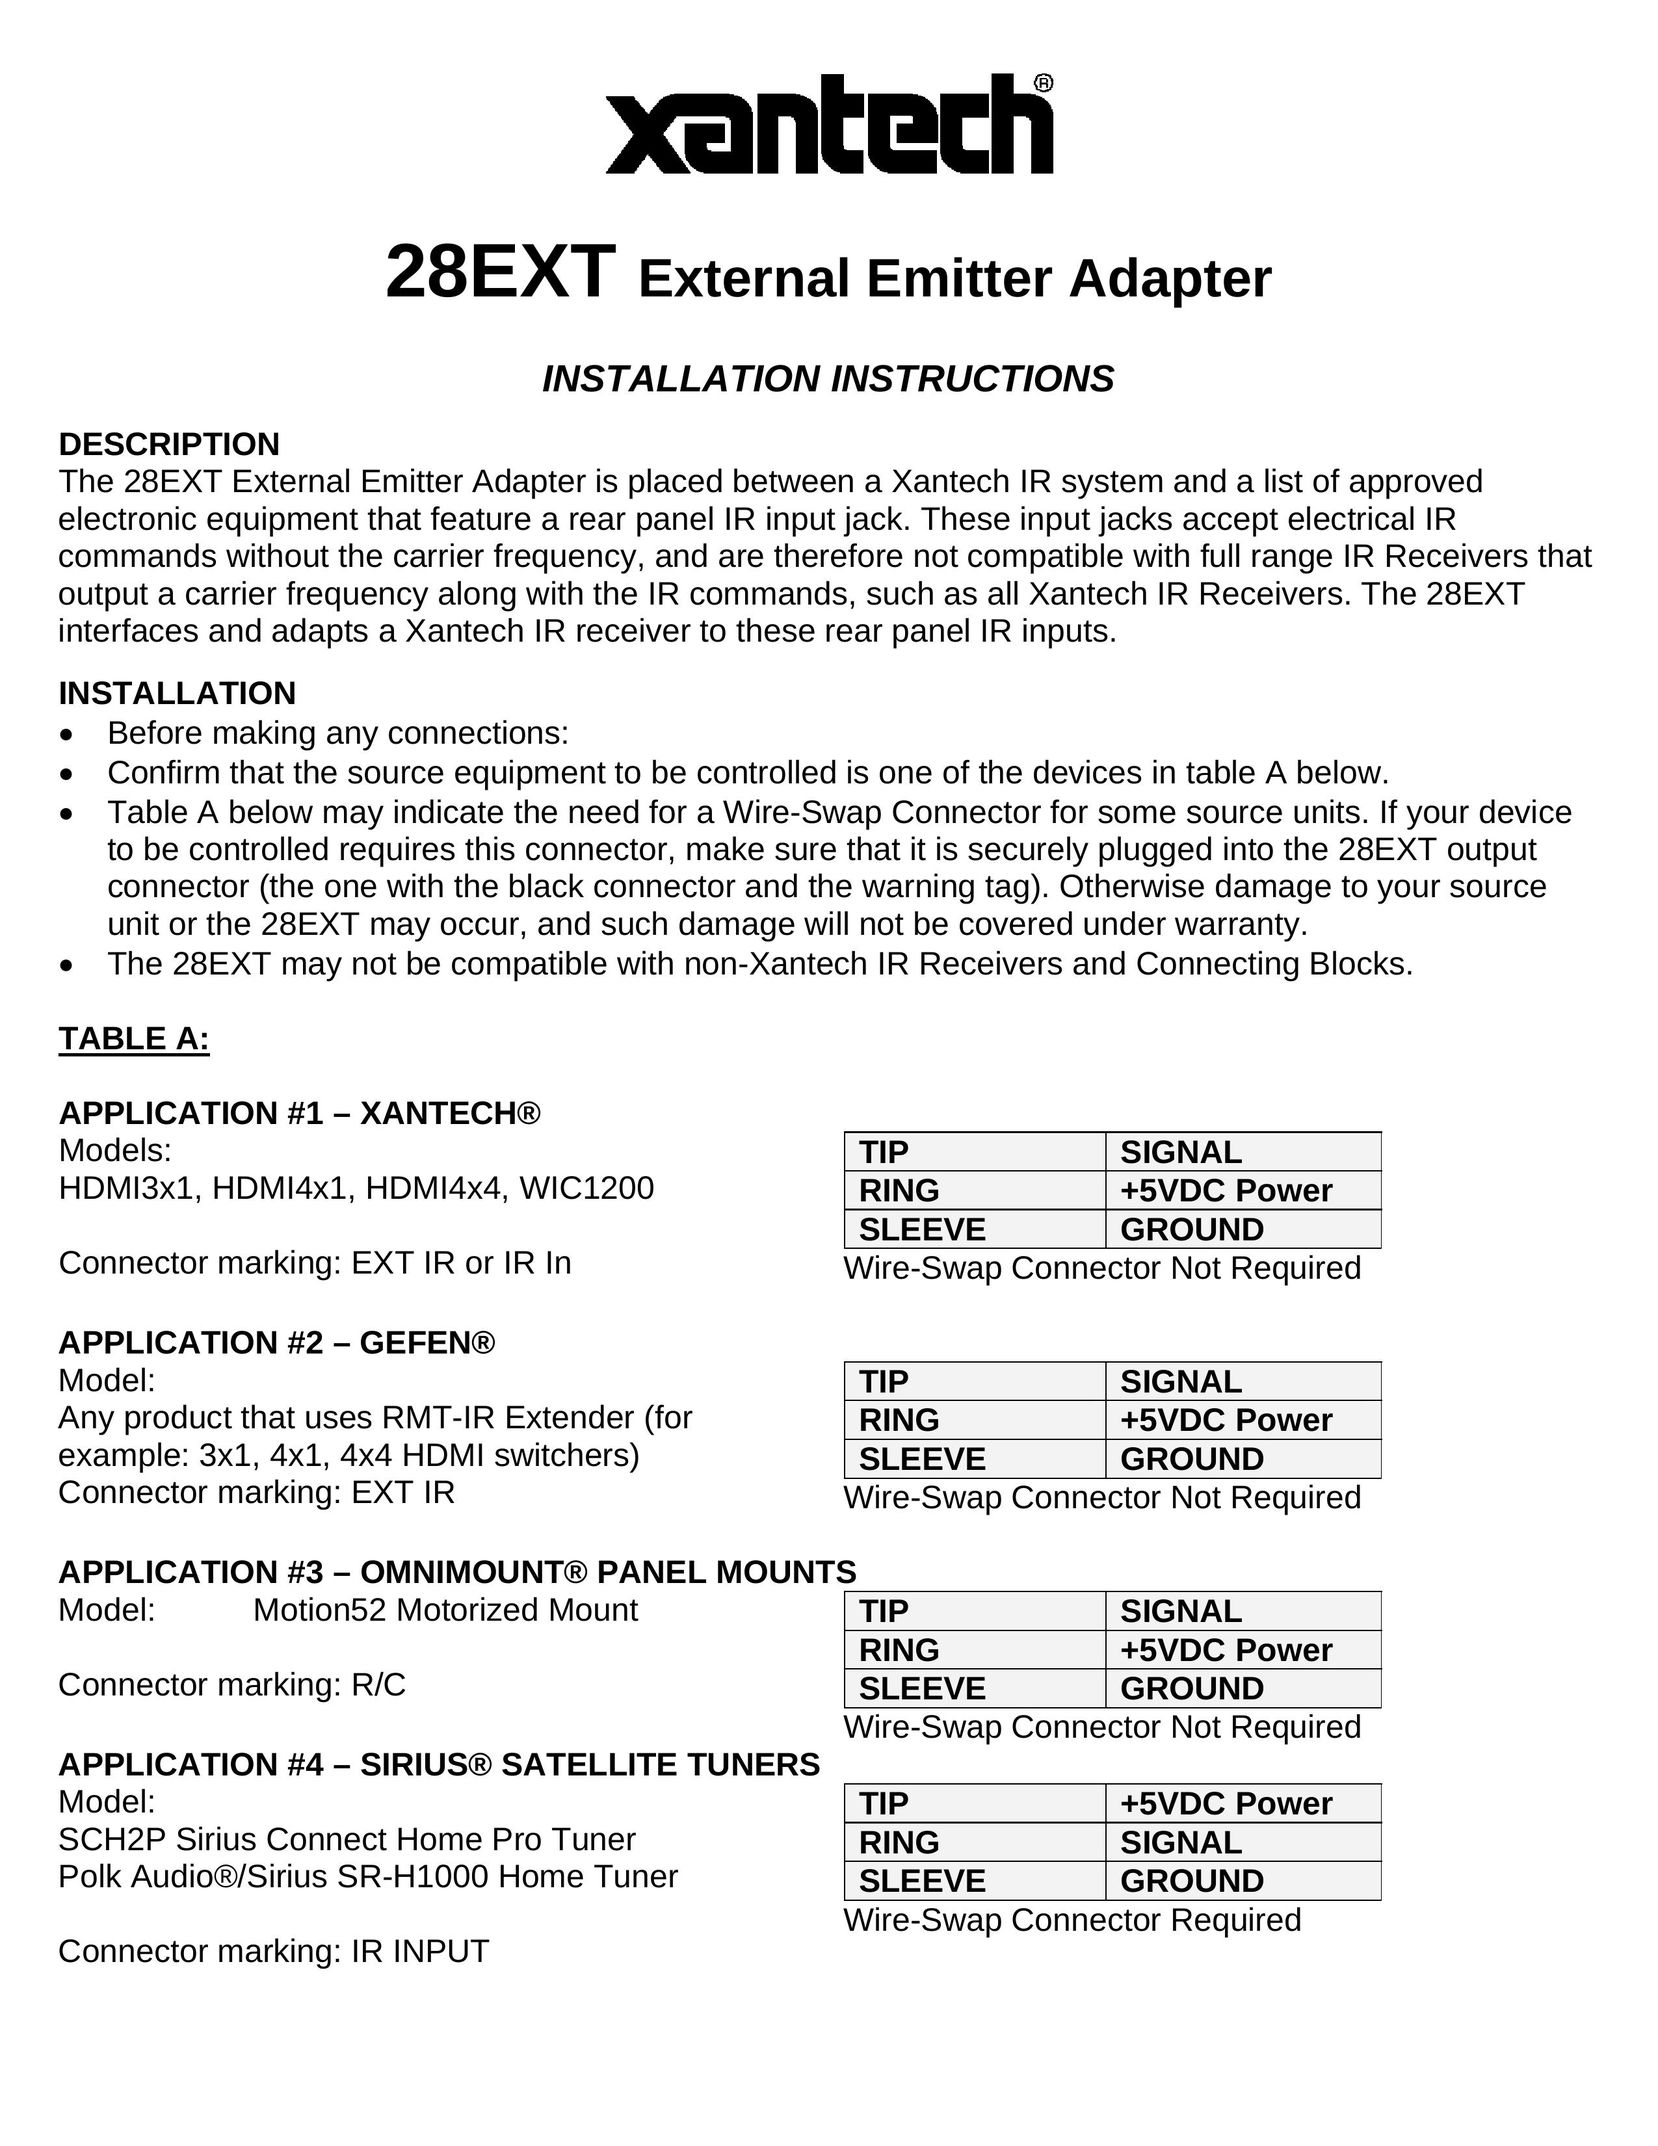 Xantech HDMI4X4 Universal Remote User Manual